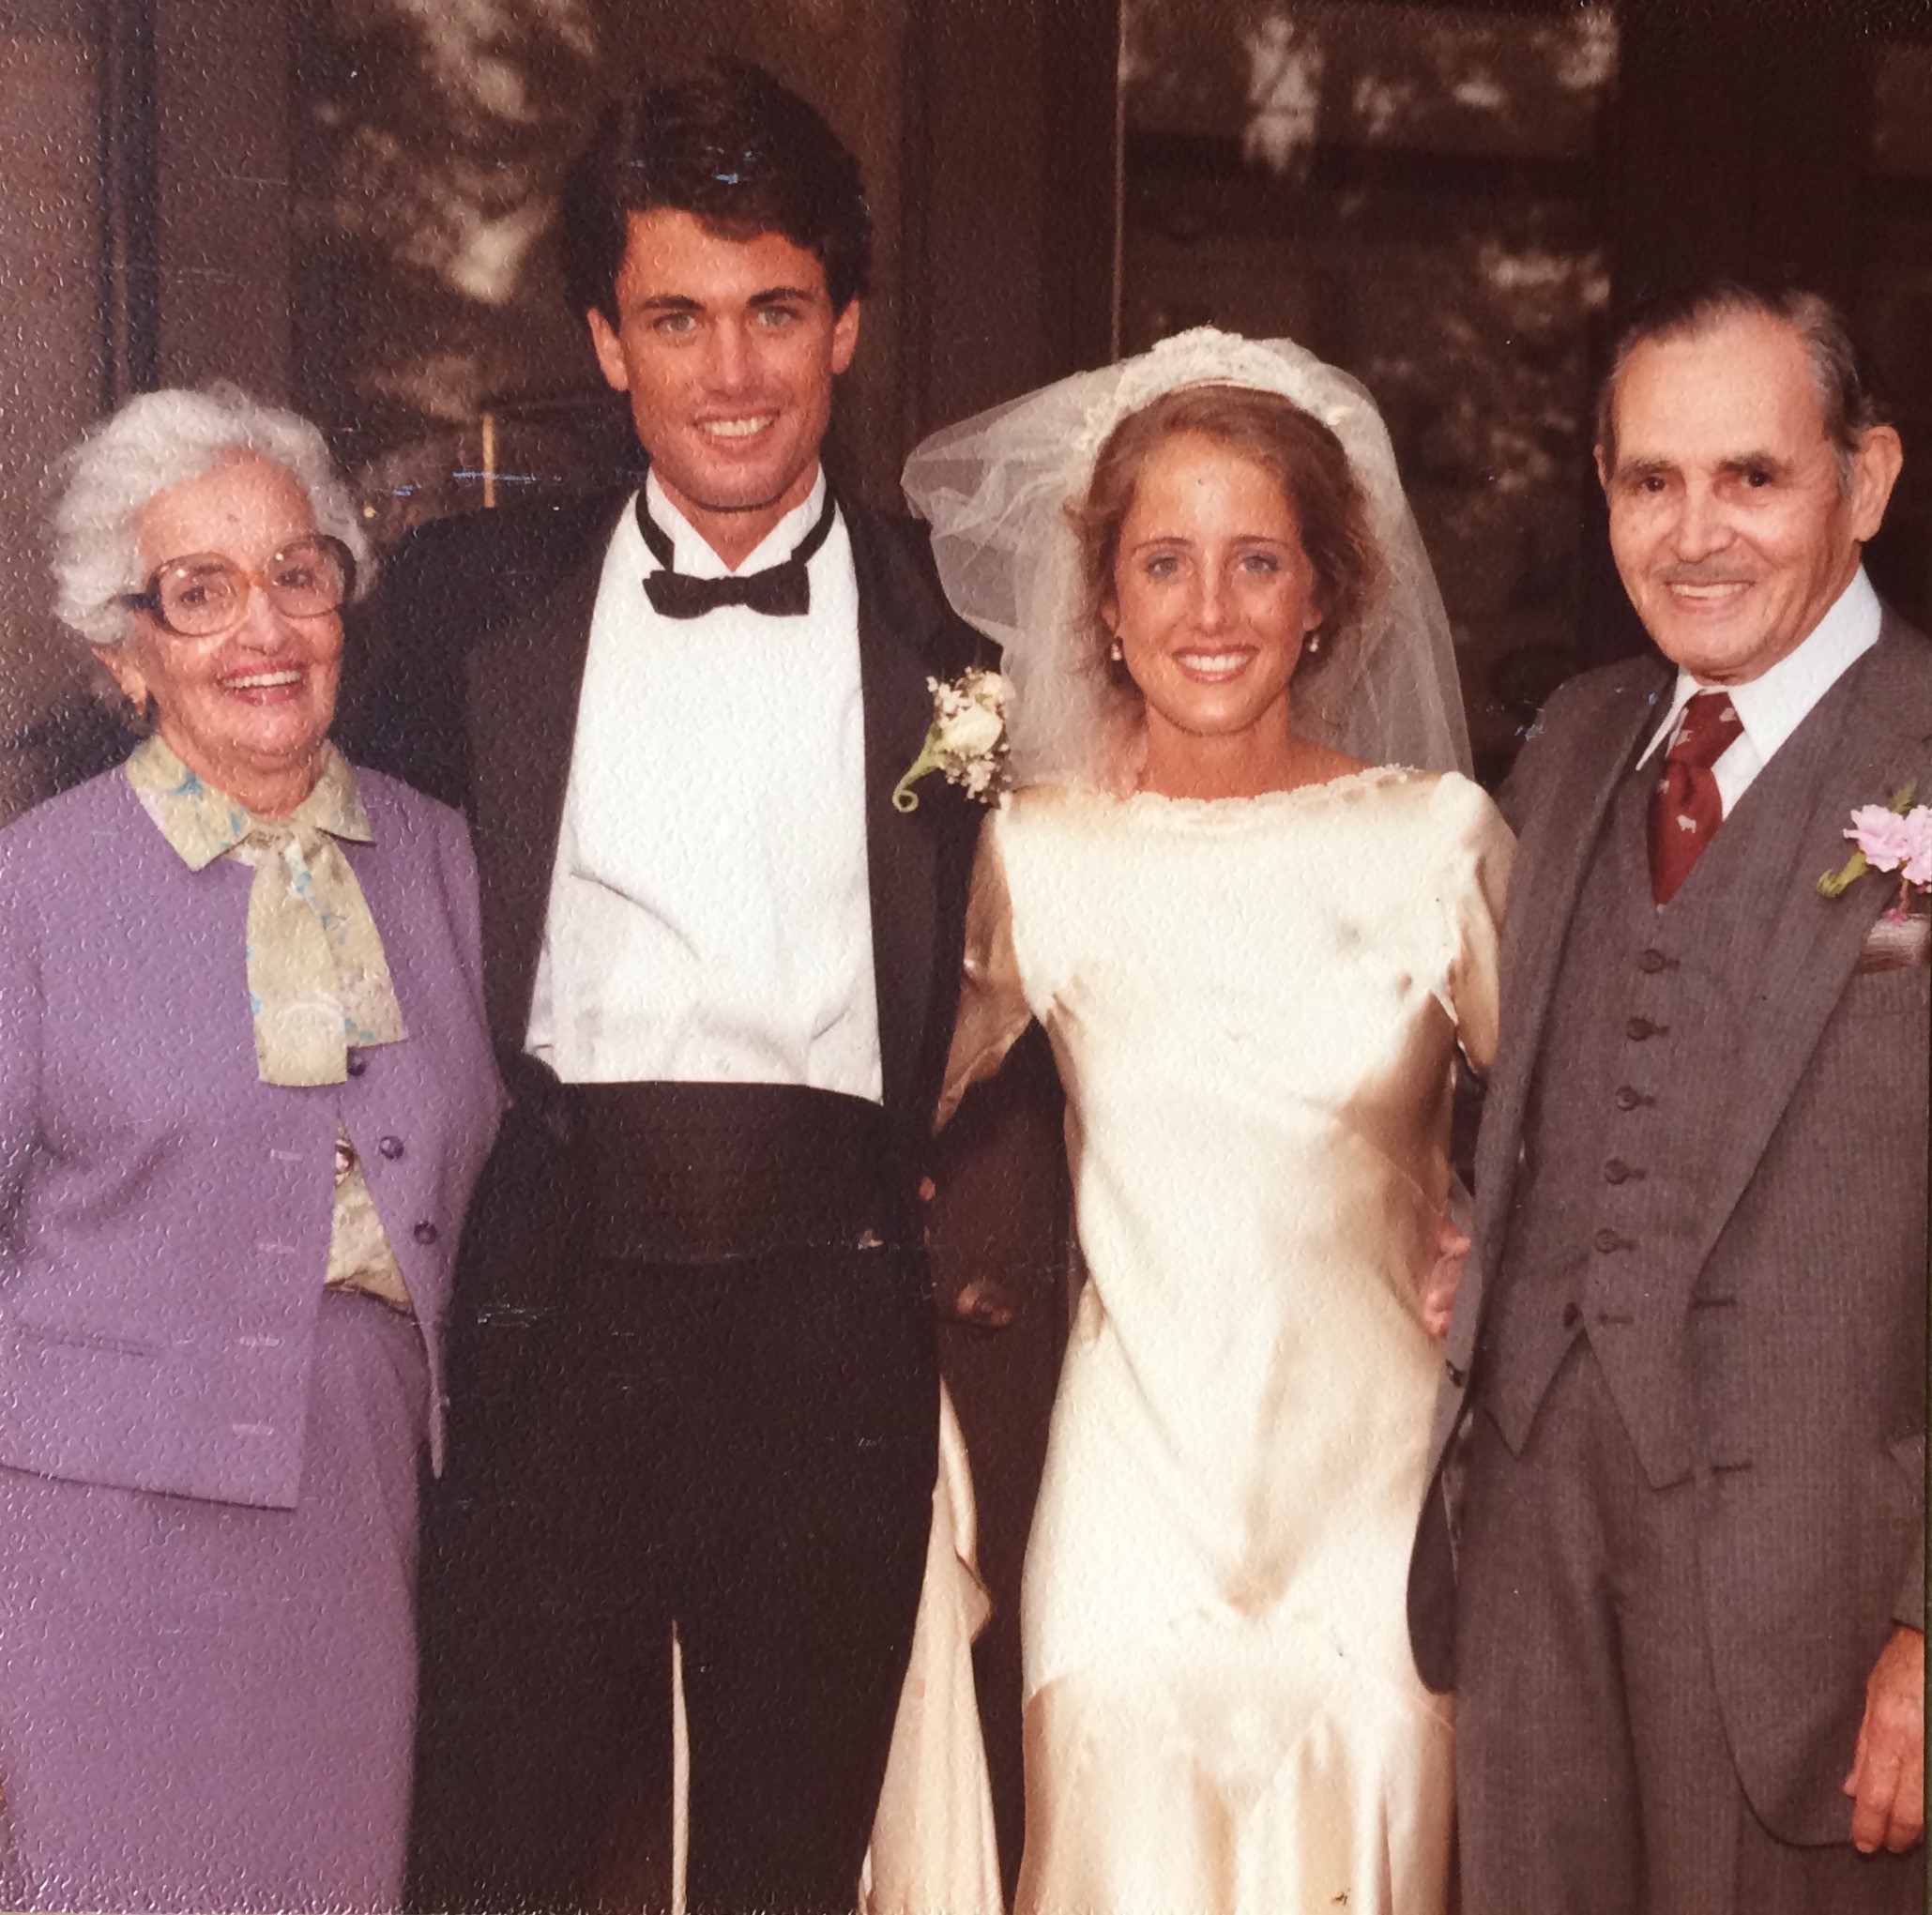 PHOTO: Maria Teresa Moreno and Manuel Moreno pose with Marta and Kevin O'Hara on their wedding day in 1983.